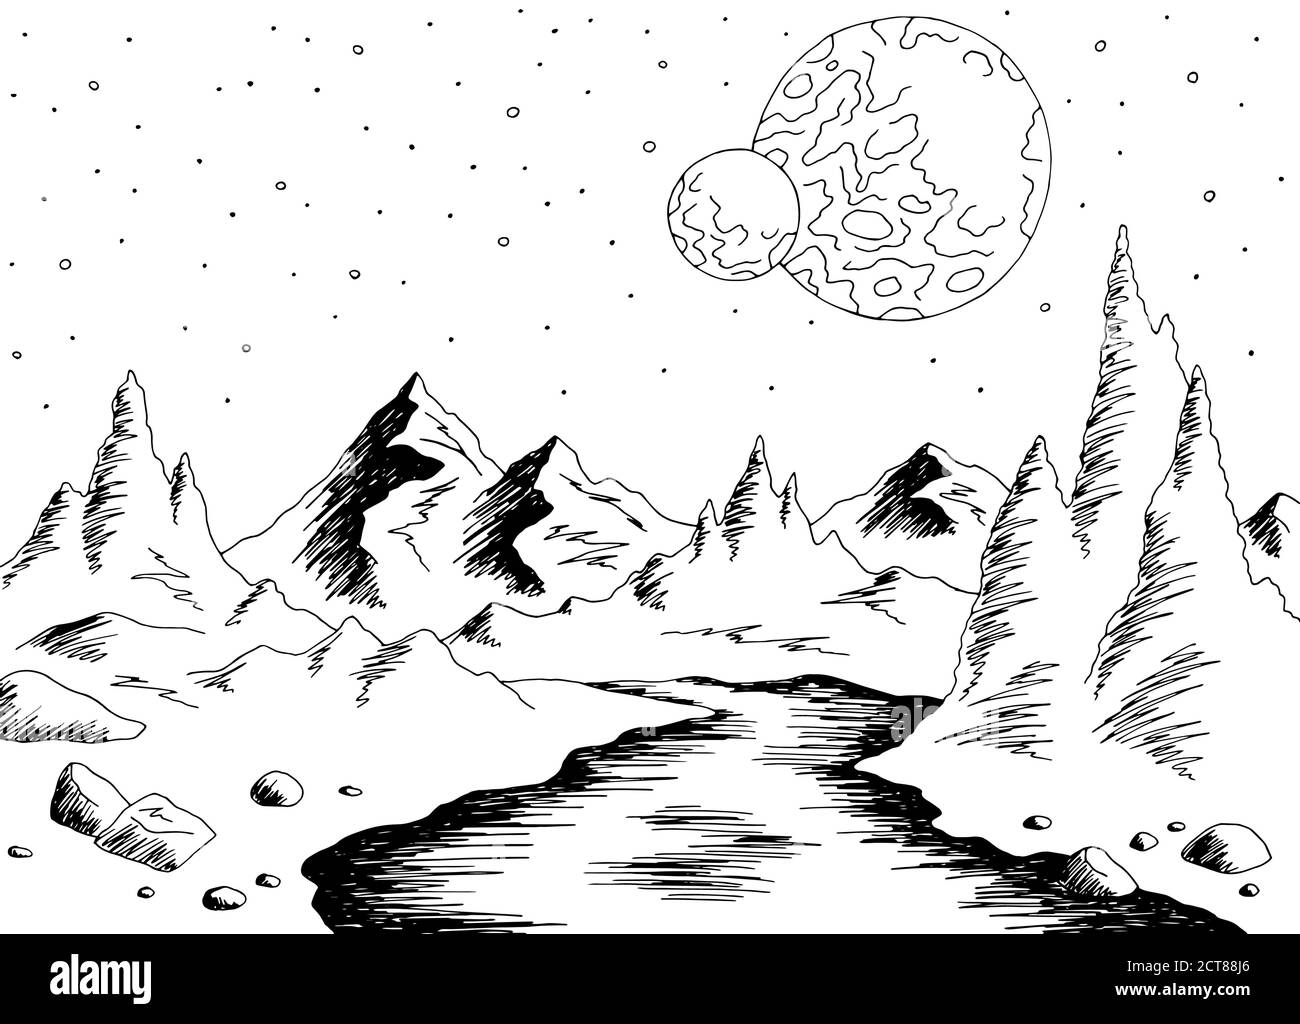 Alien Planet Fluss Grafik schwarz weiß Raum Landschaft Skizze Illustration vektor Stock Vektor